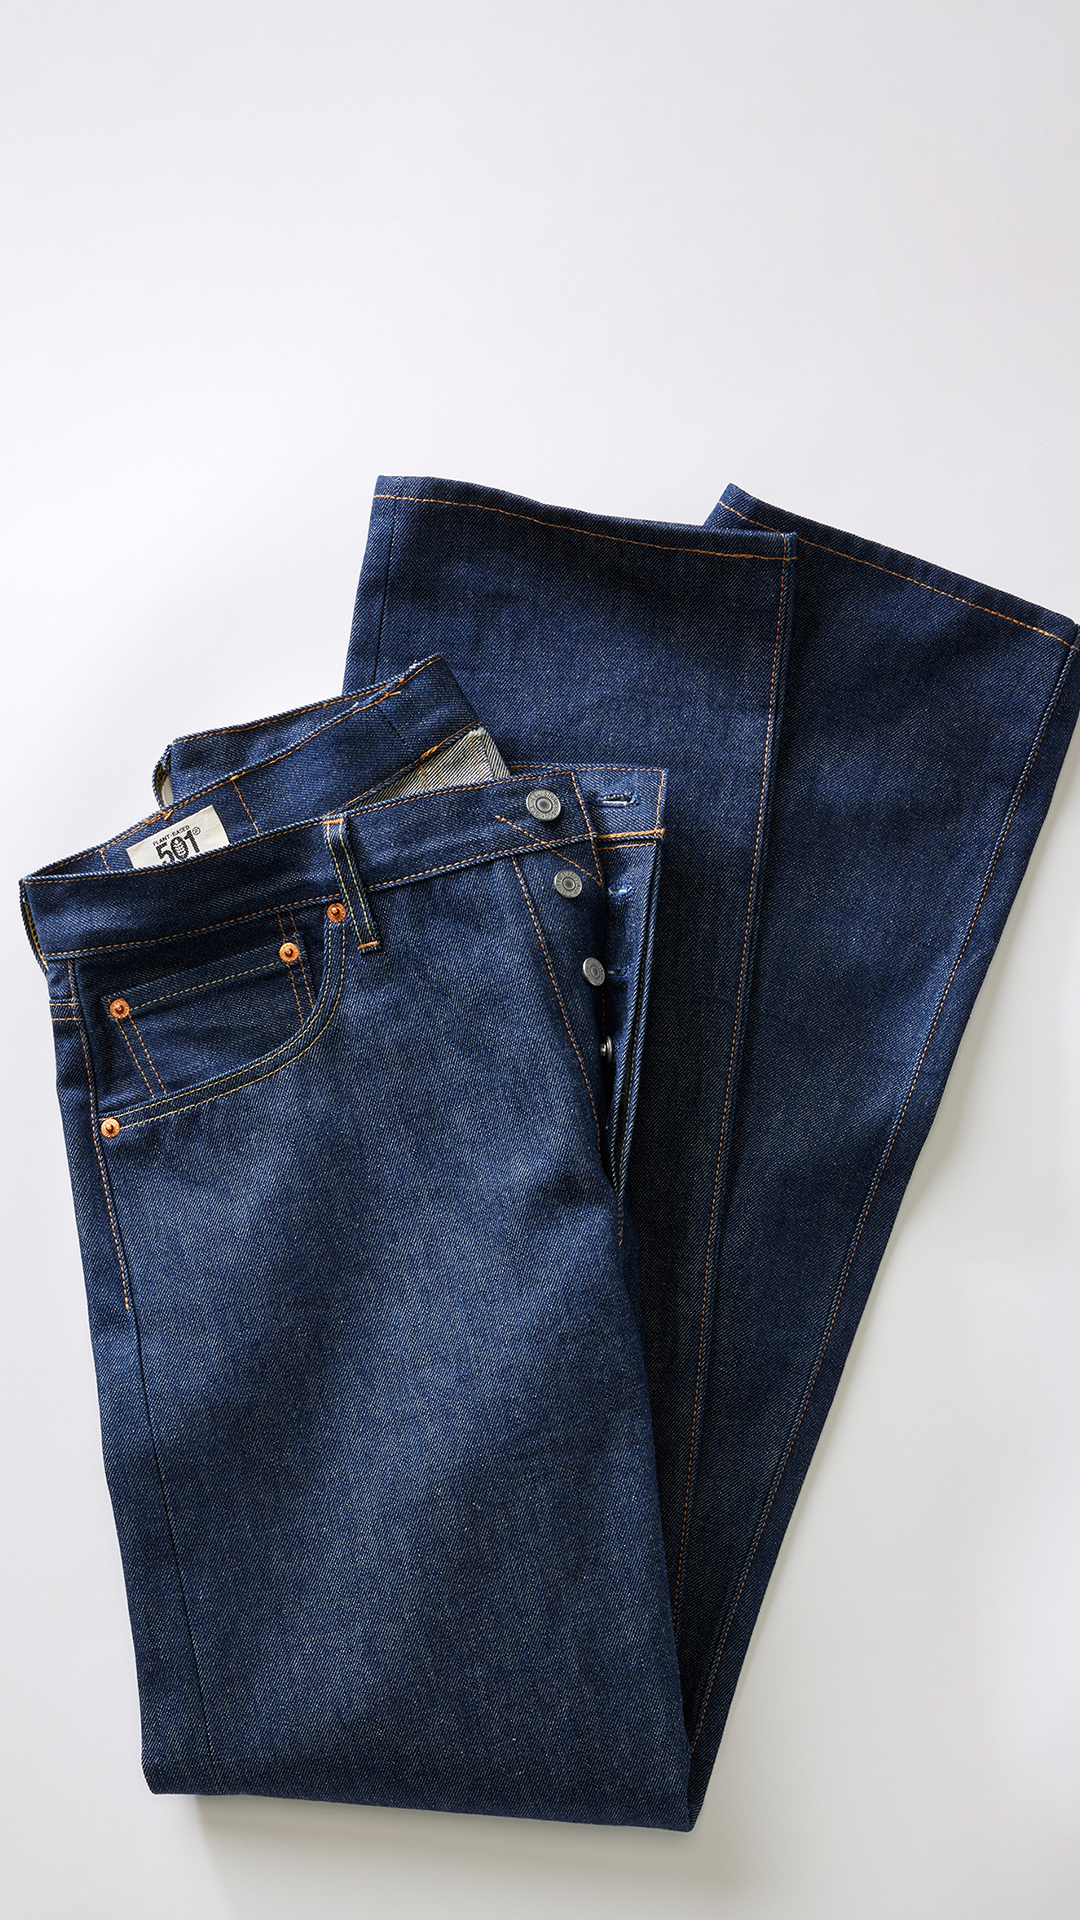 Levi's Plant-Based 501 Jeans >>FUTUREVVORLD